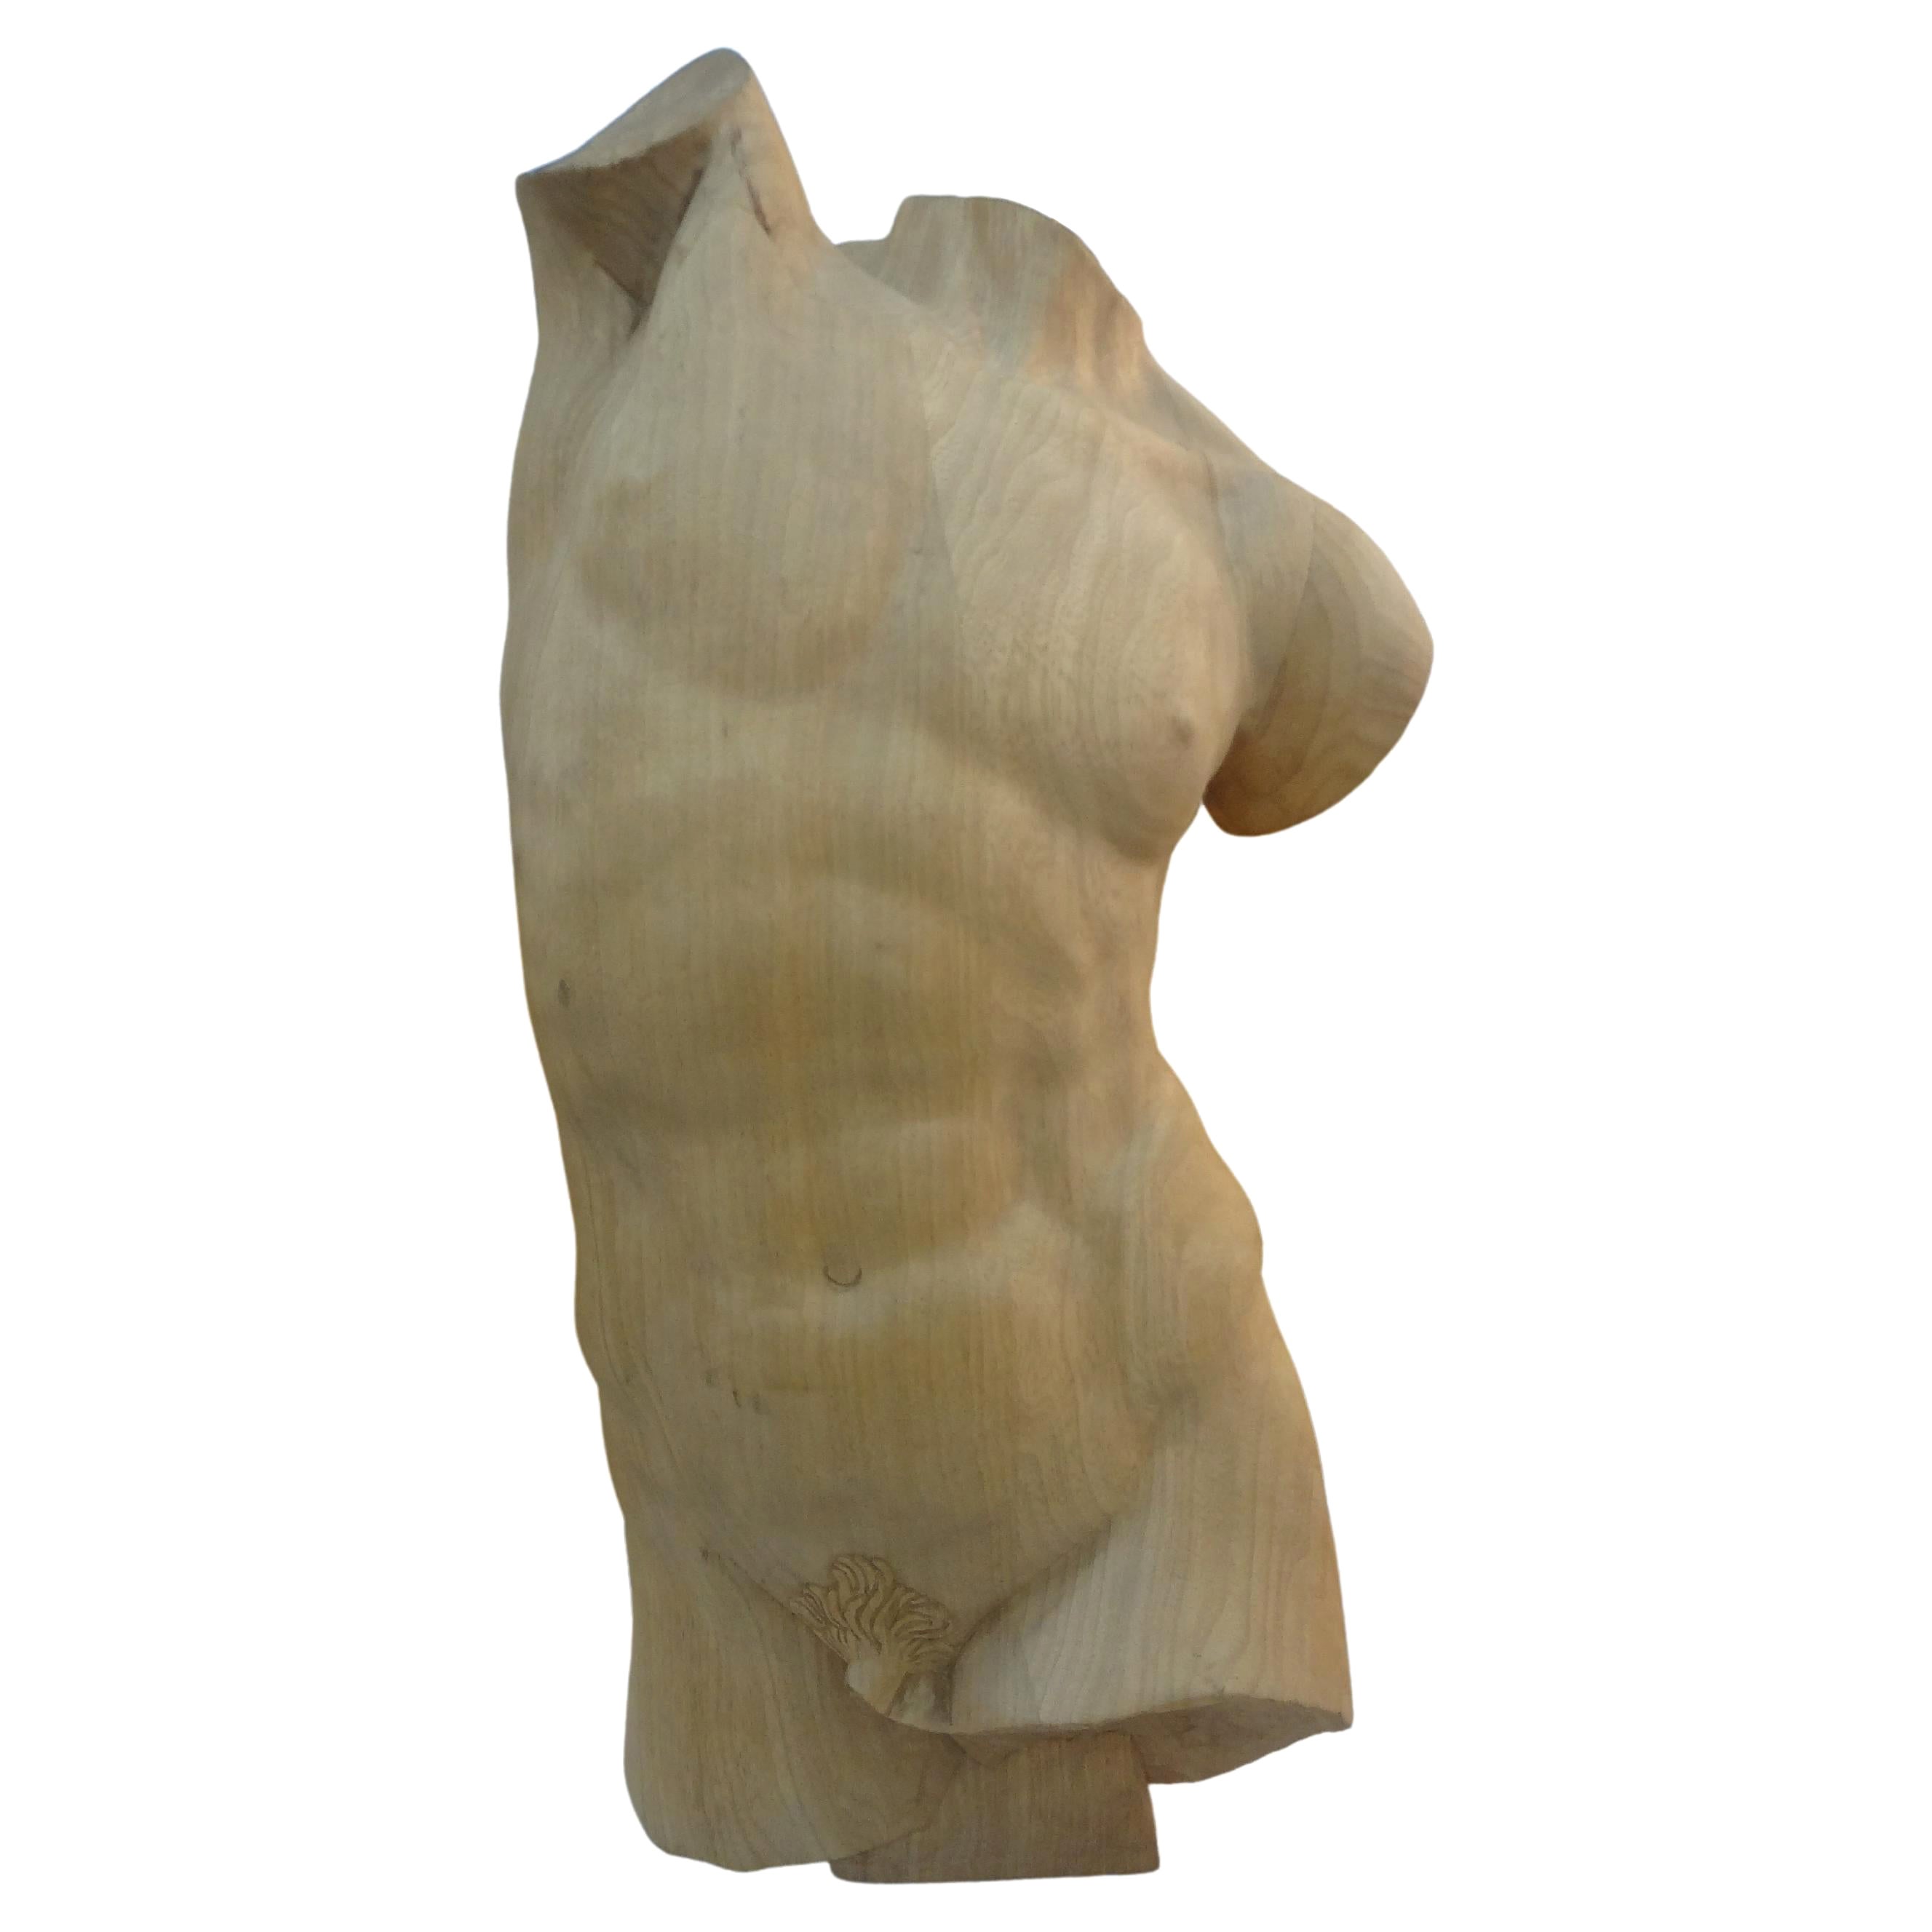 Torse masculin italien moderne en bois sculpté